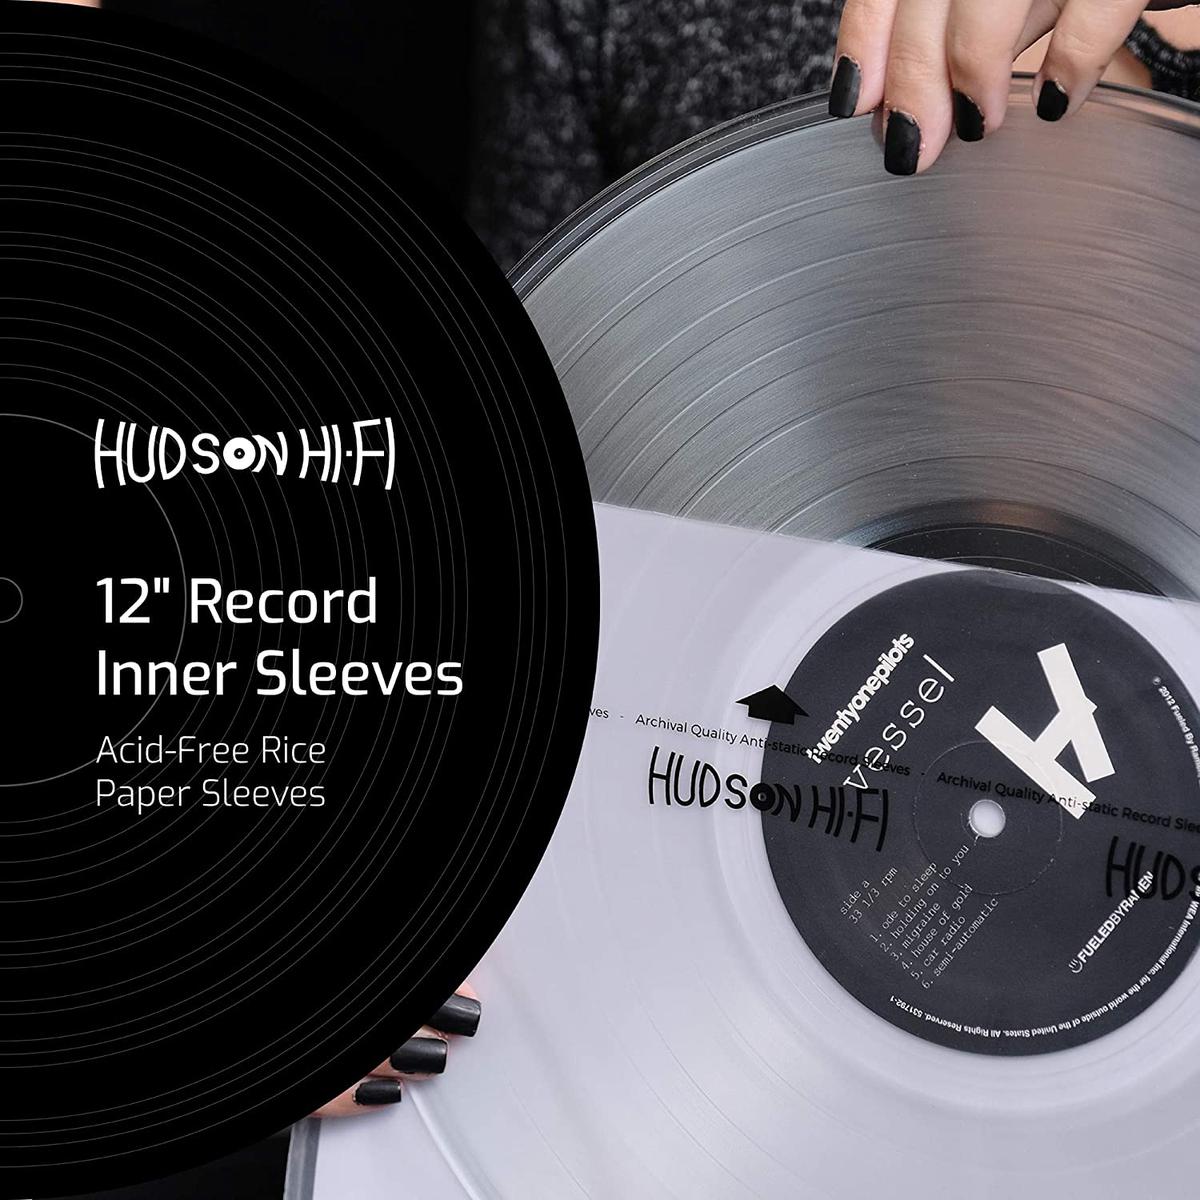 Hudson Hi-Fi Anti-Static Vinyl Record Inner ...